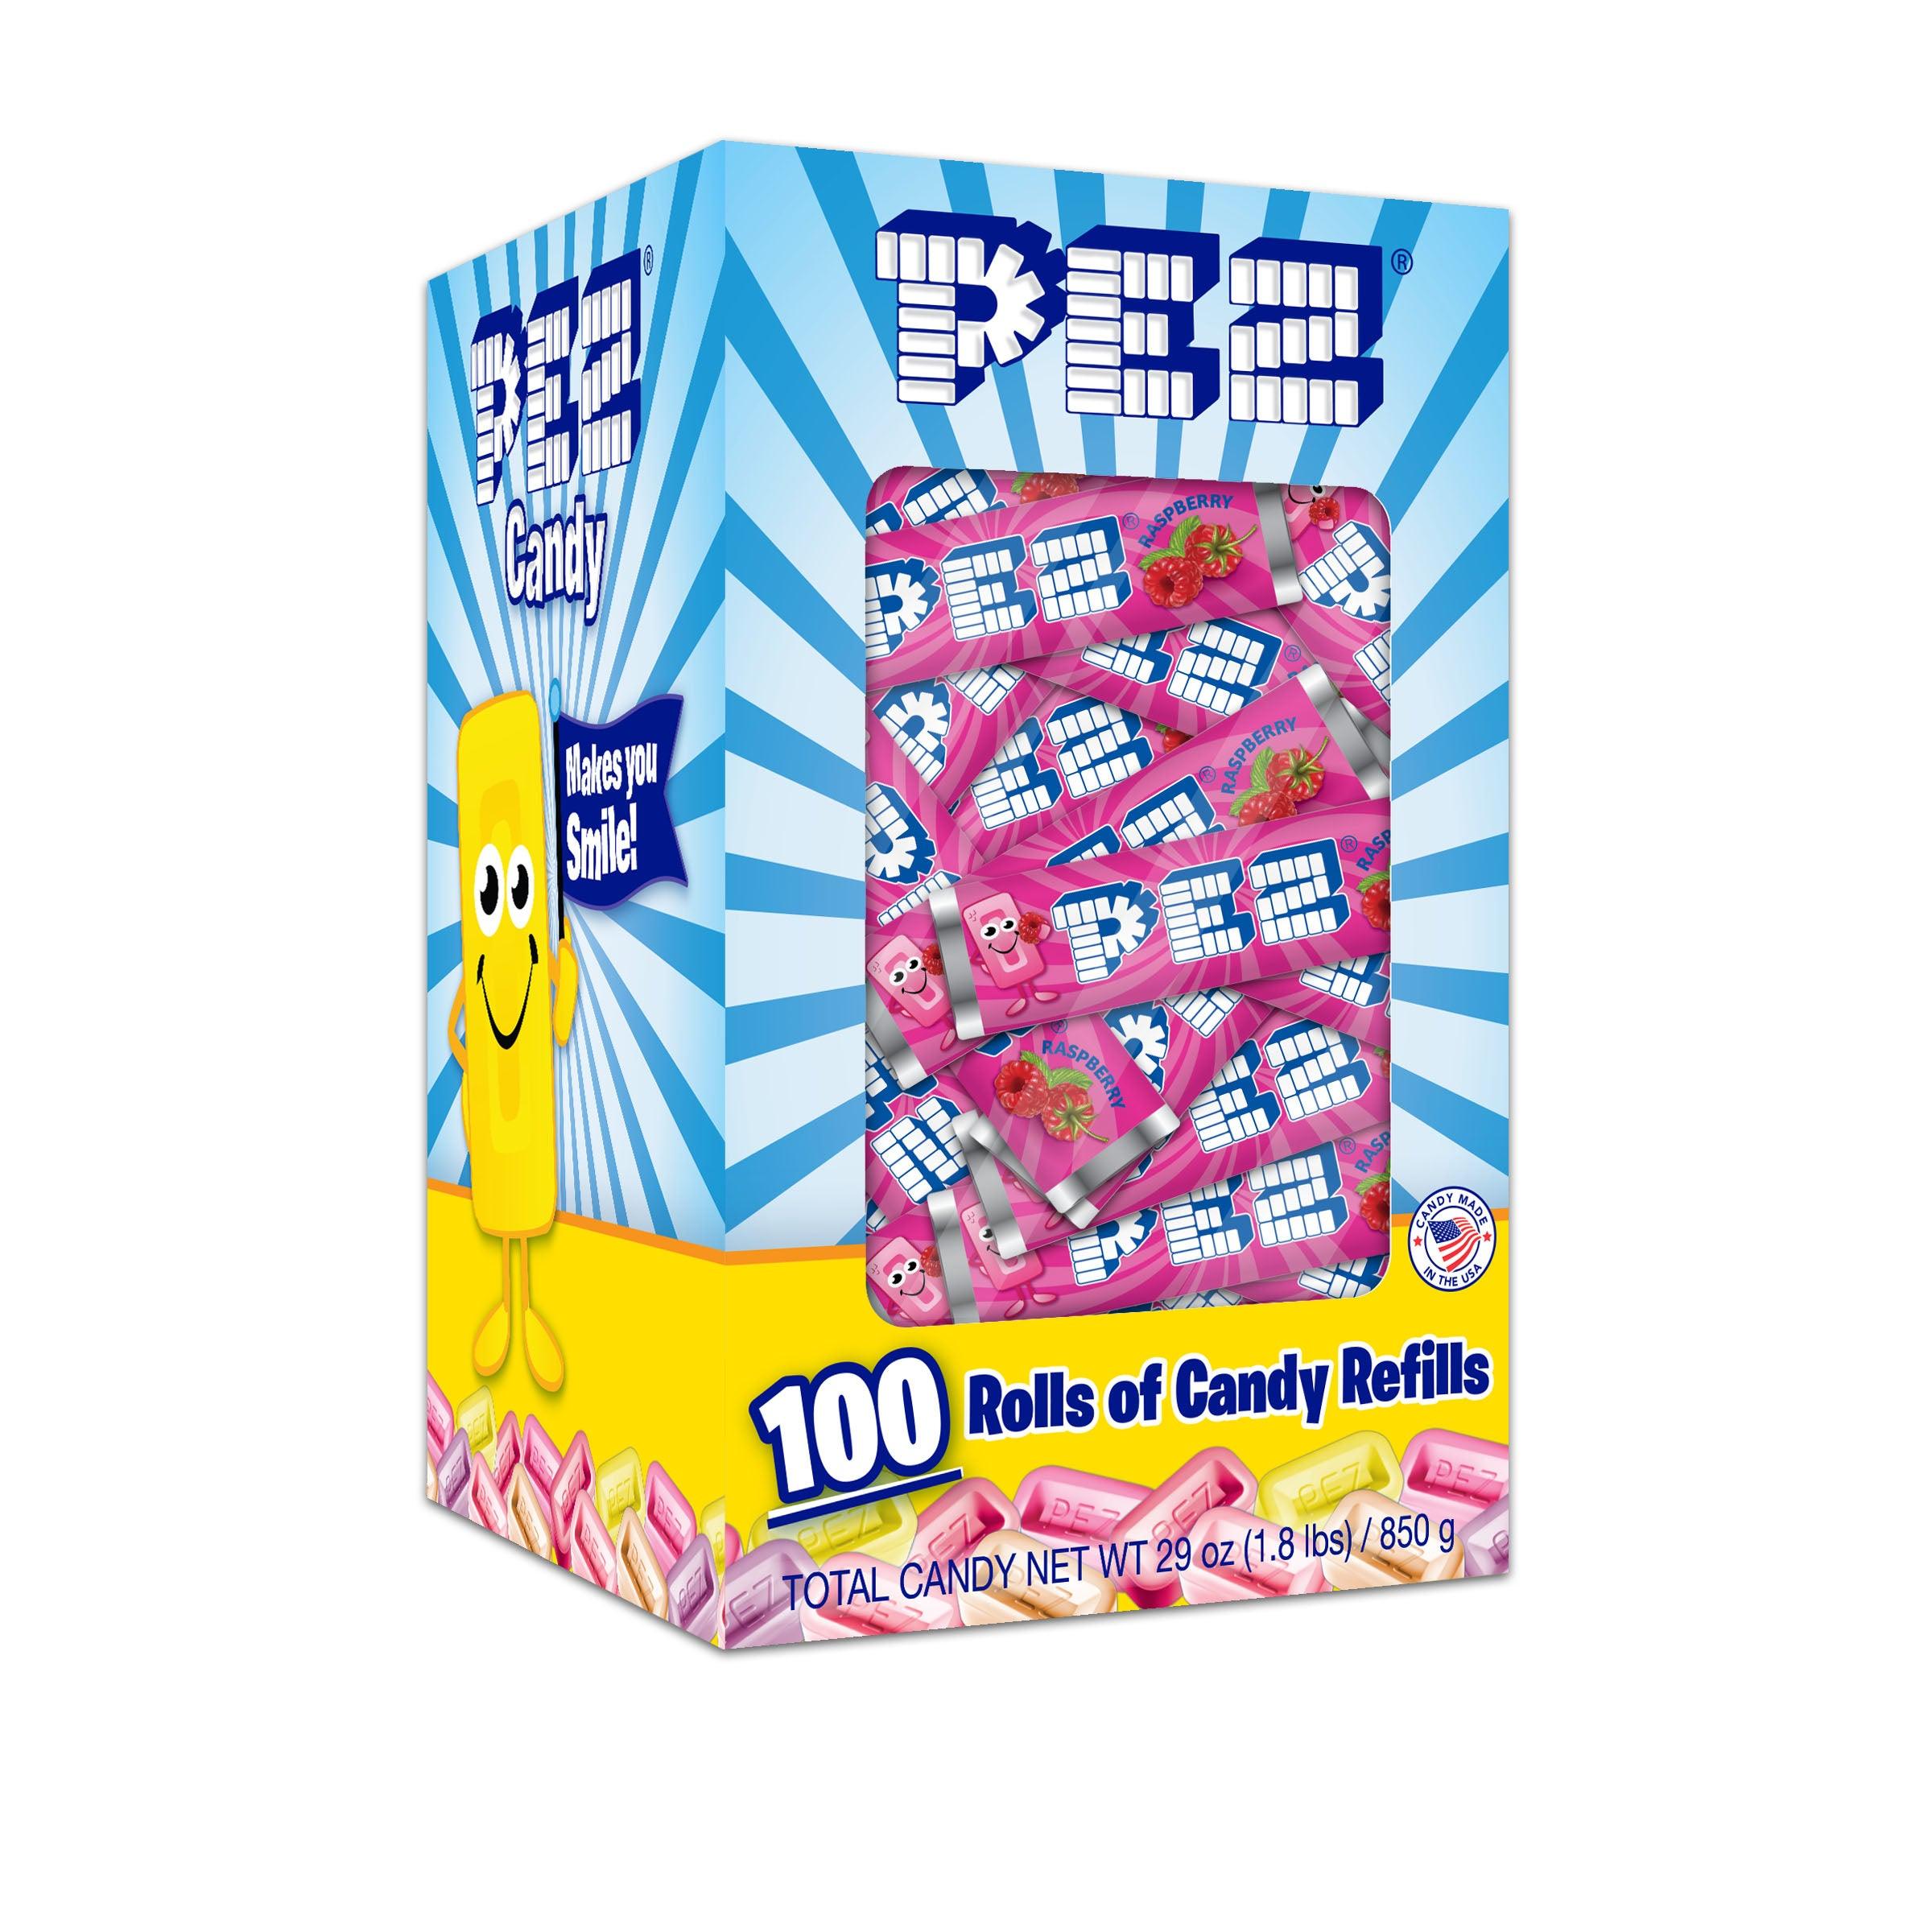 Raspberry PEZ Candy Refills Bulk Box - 100 rolls